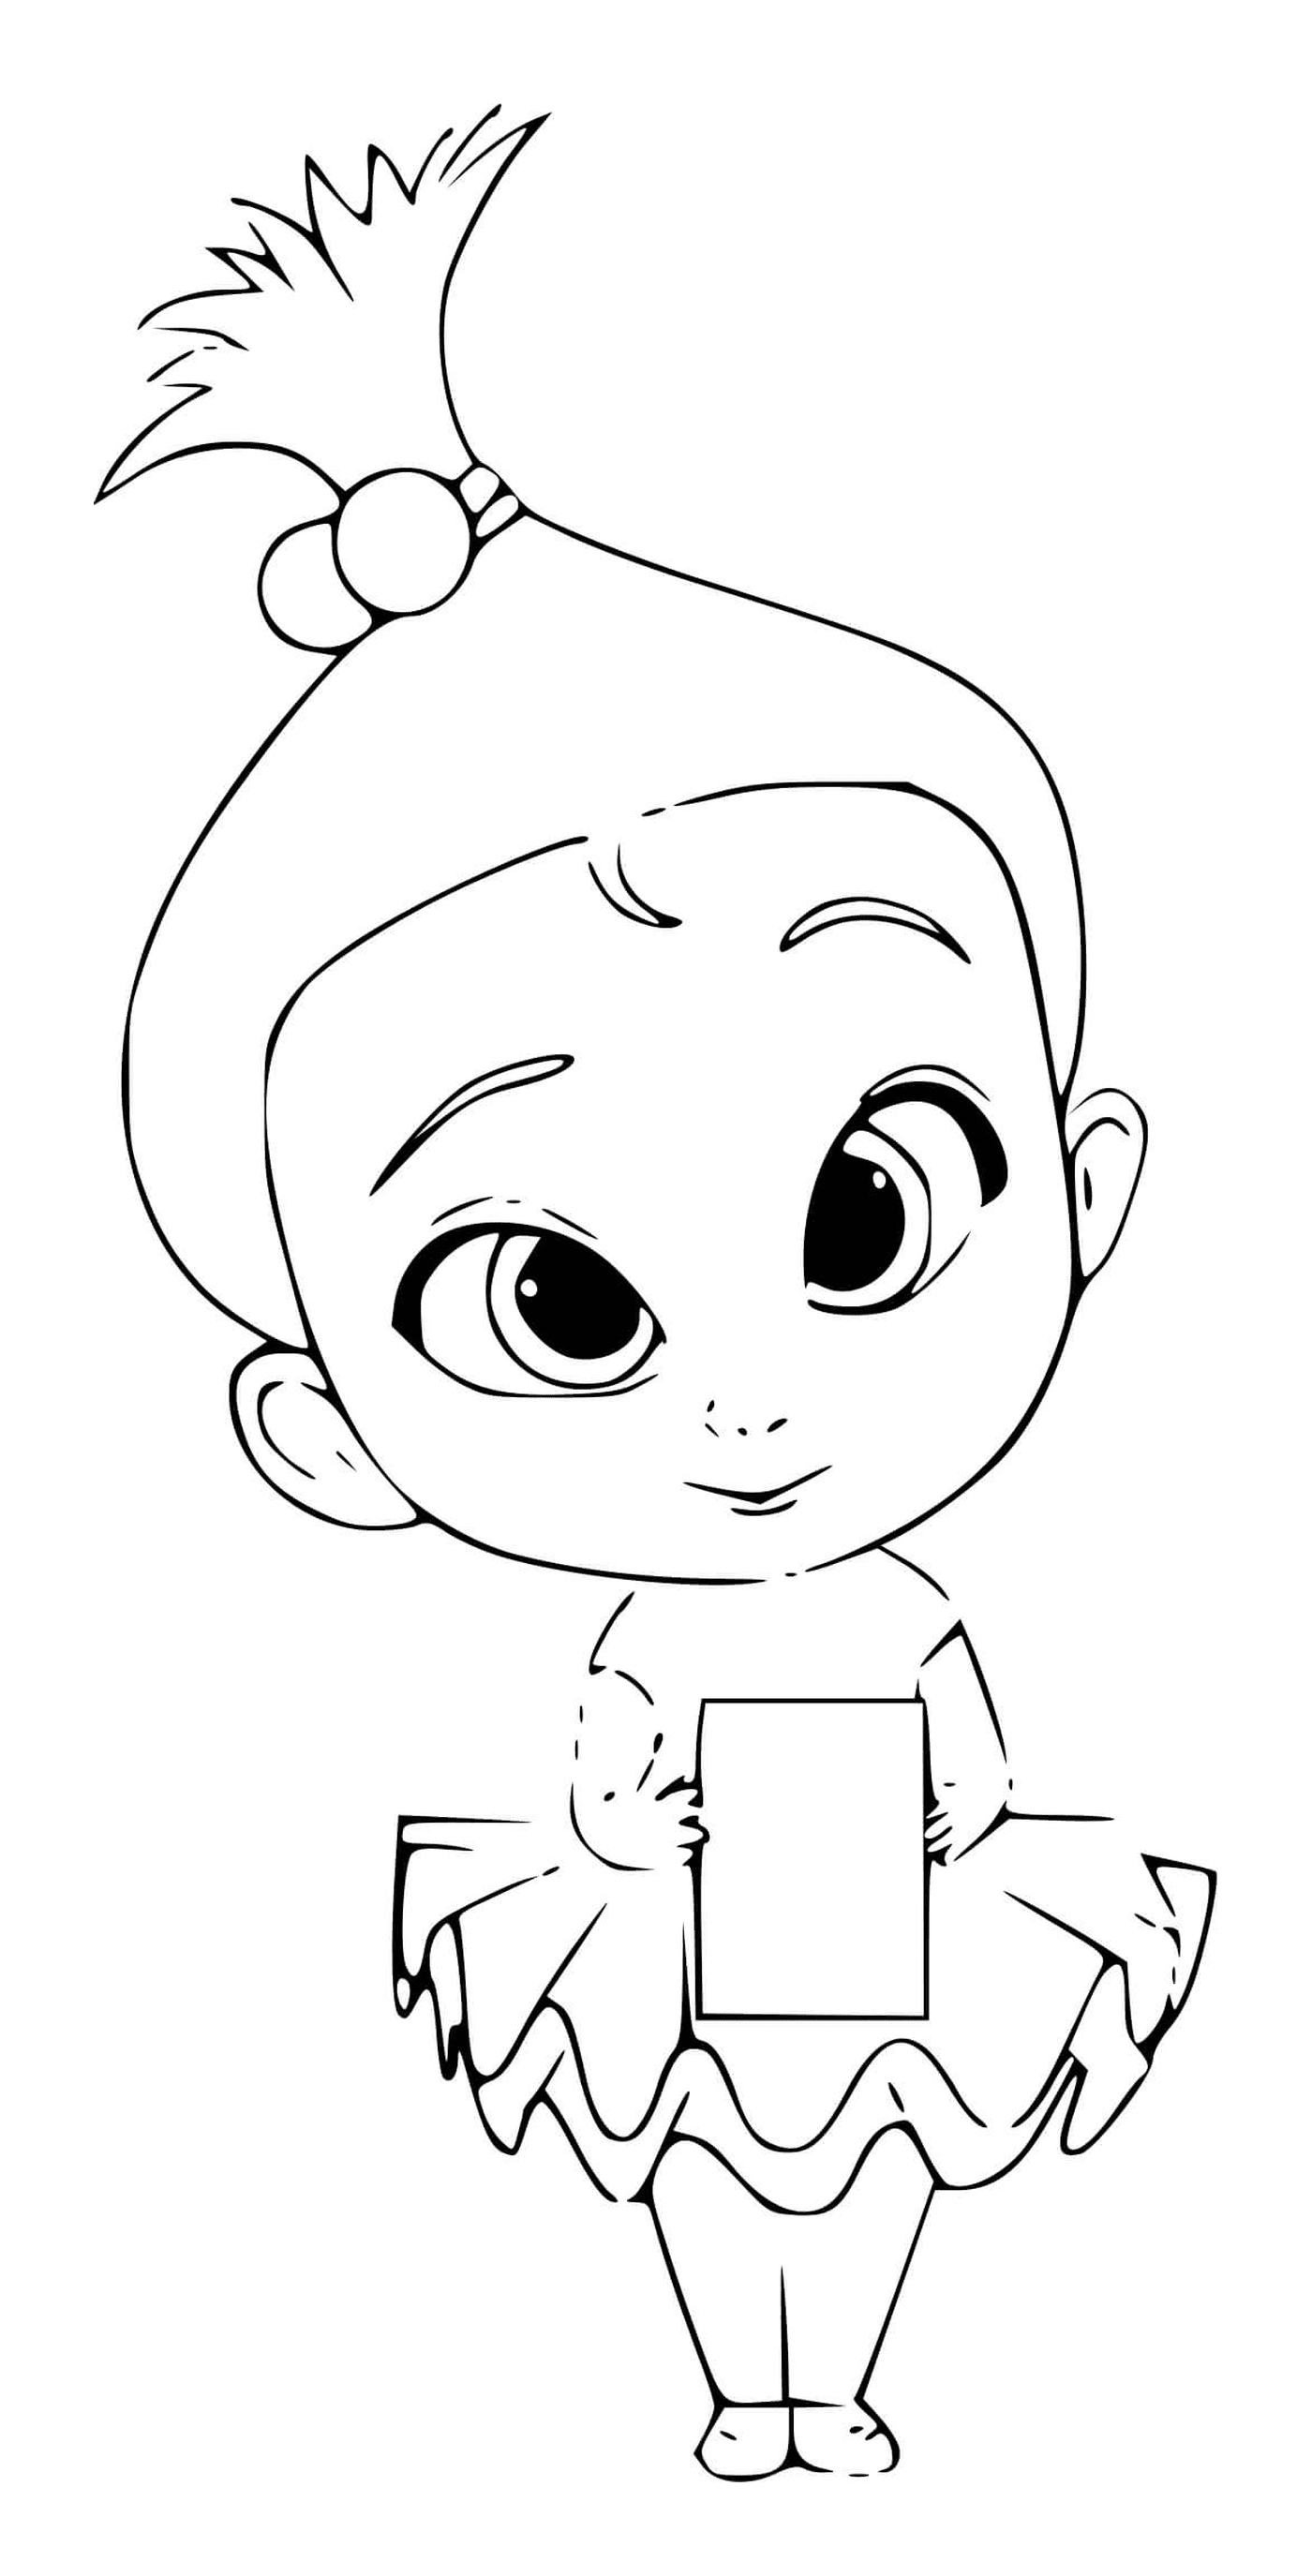  Un chico sosteniendo un libro 